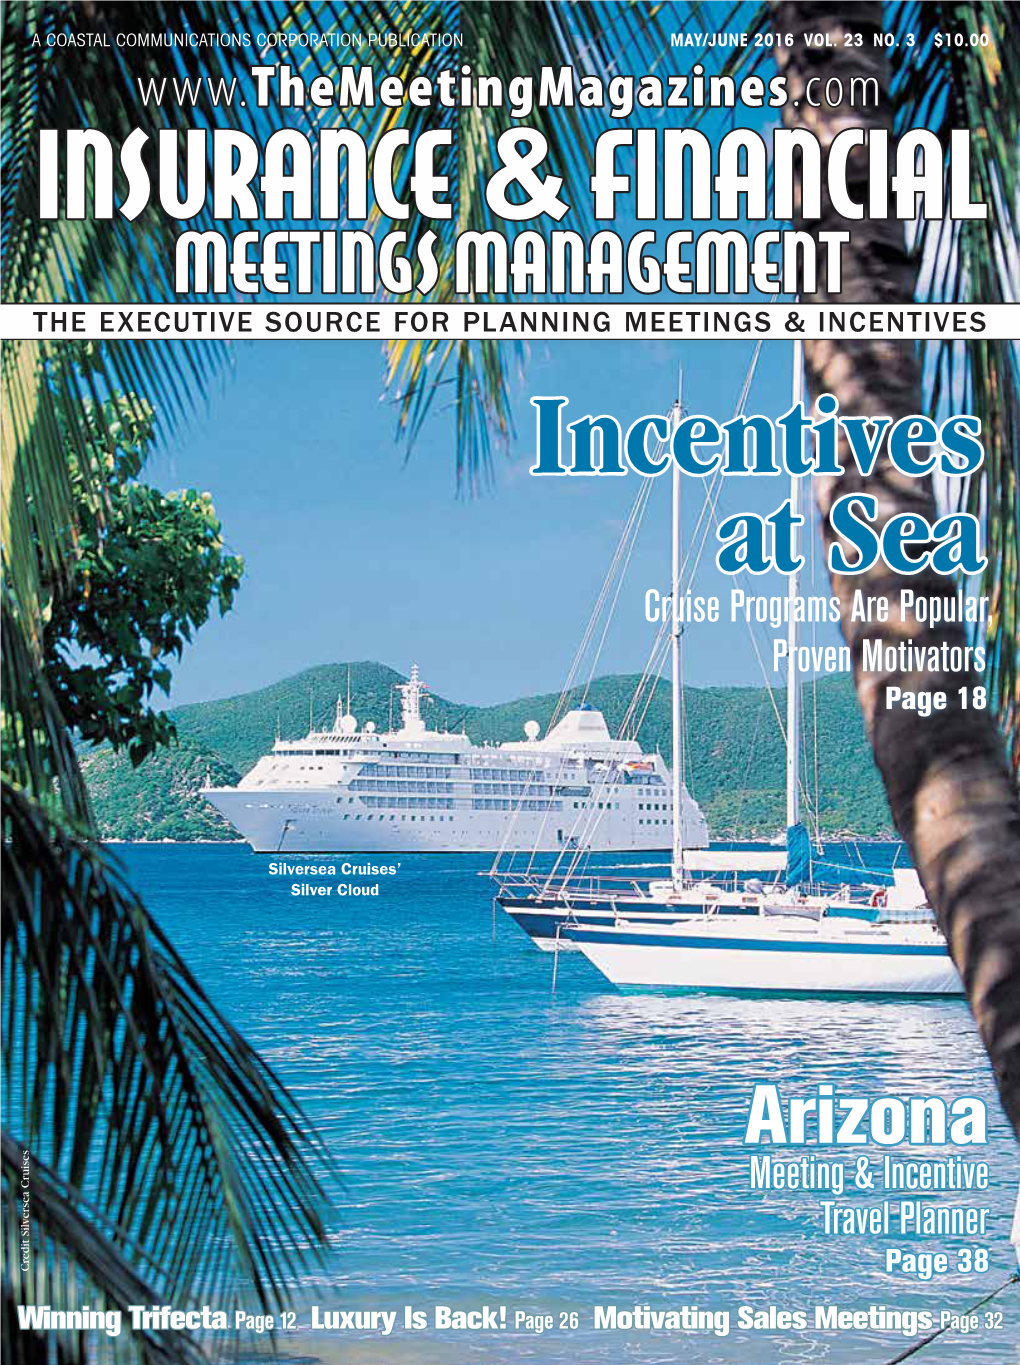 Incentives at Sea Cruise Programs Are Popular, Proven Motivators Page 18